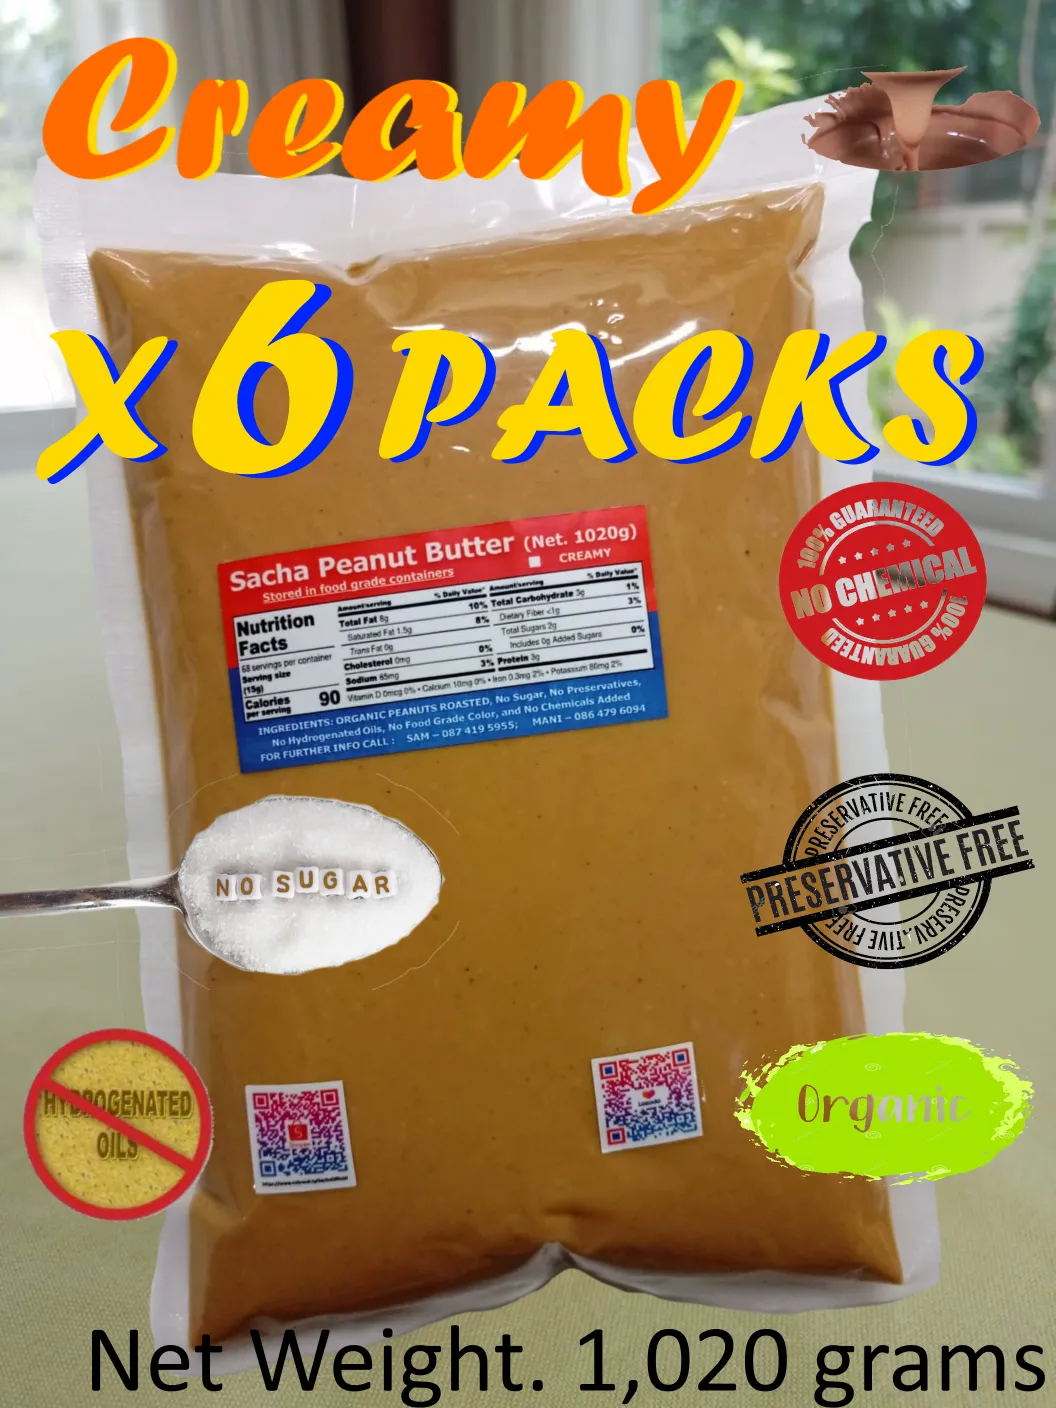 Sacha Peanut Butter (Creamy x 6 Packs) All Natural Organic (1,020 grams x 6 แพ็ค) - Free Delivery, ซาช่า-เนยถั่ว (ส่งฟรี)